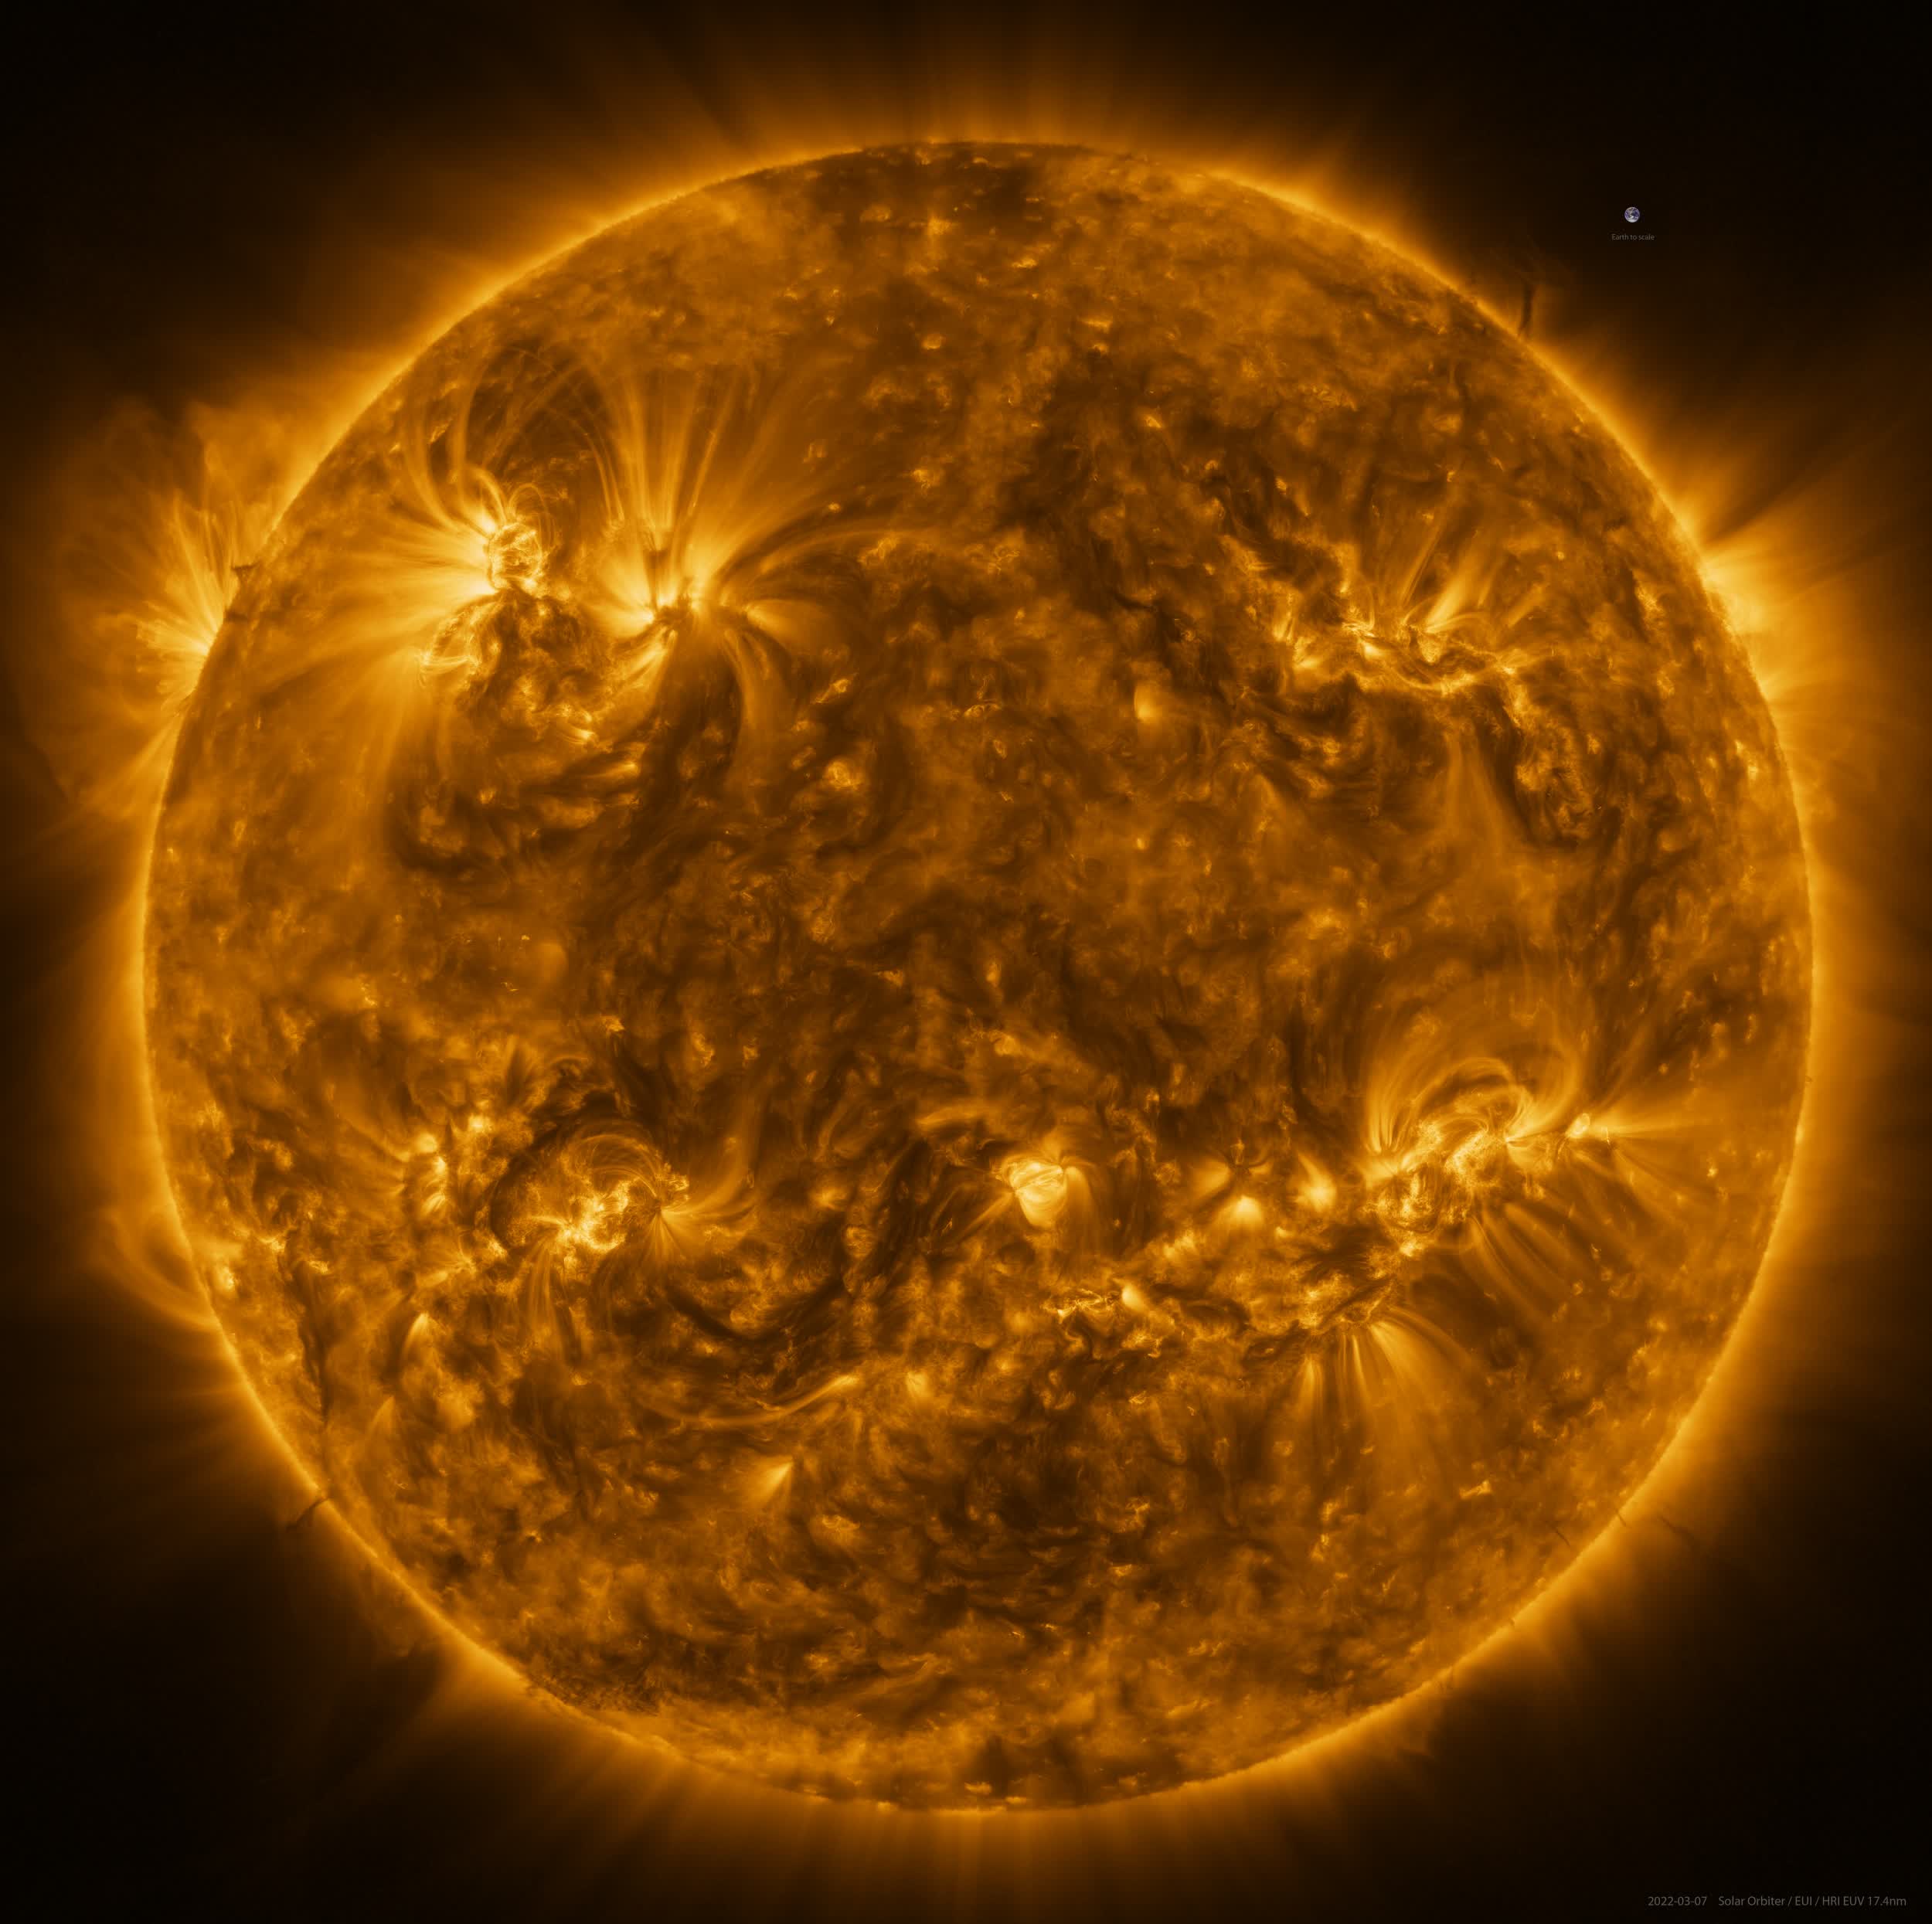 European probe captures the highest resolution image of the Sun's corona ever taken